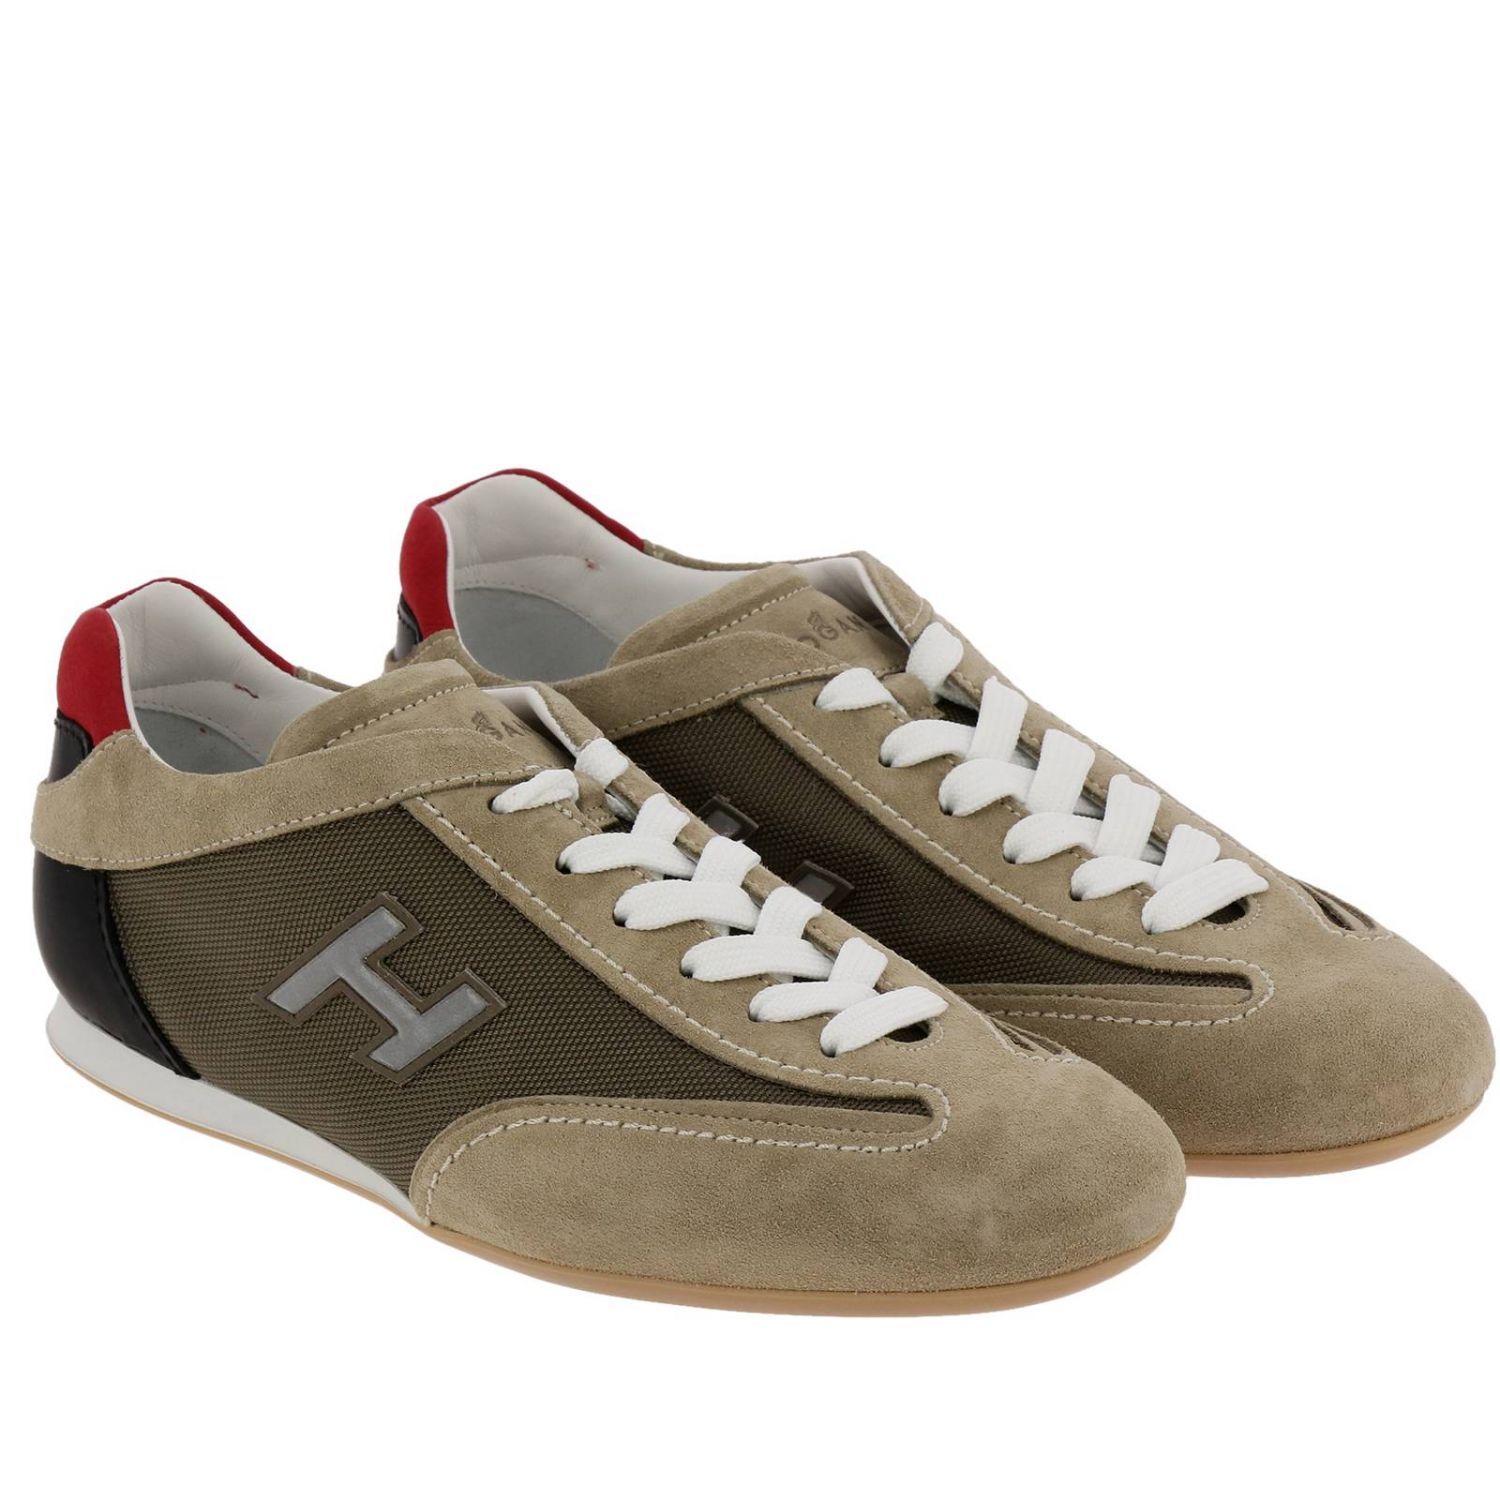 Hogan Outlet: Shoes men | Sneakers Hogan Men Beige | Sneakers Hogan ...